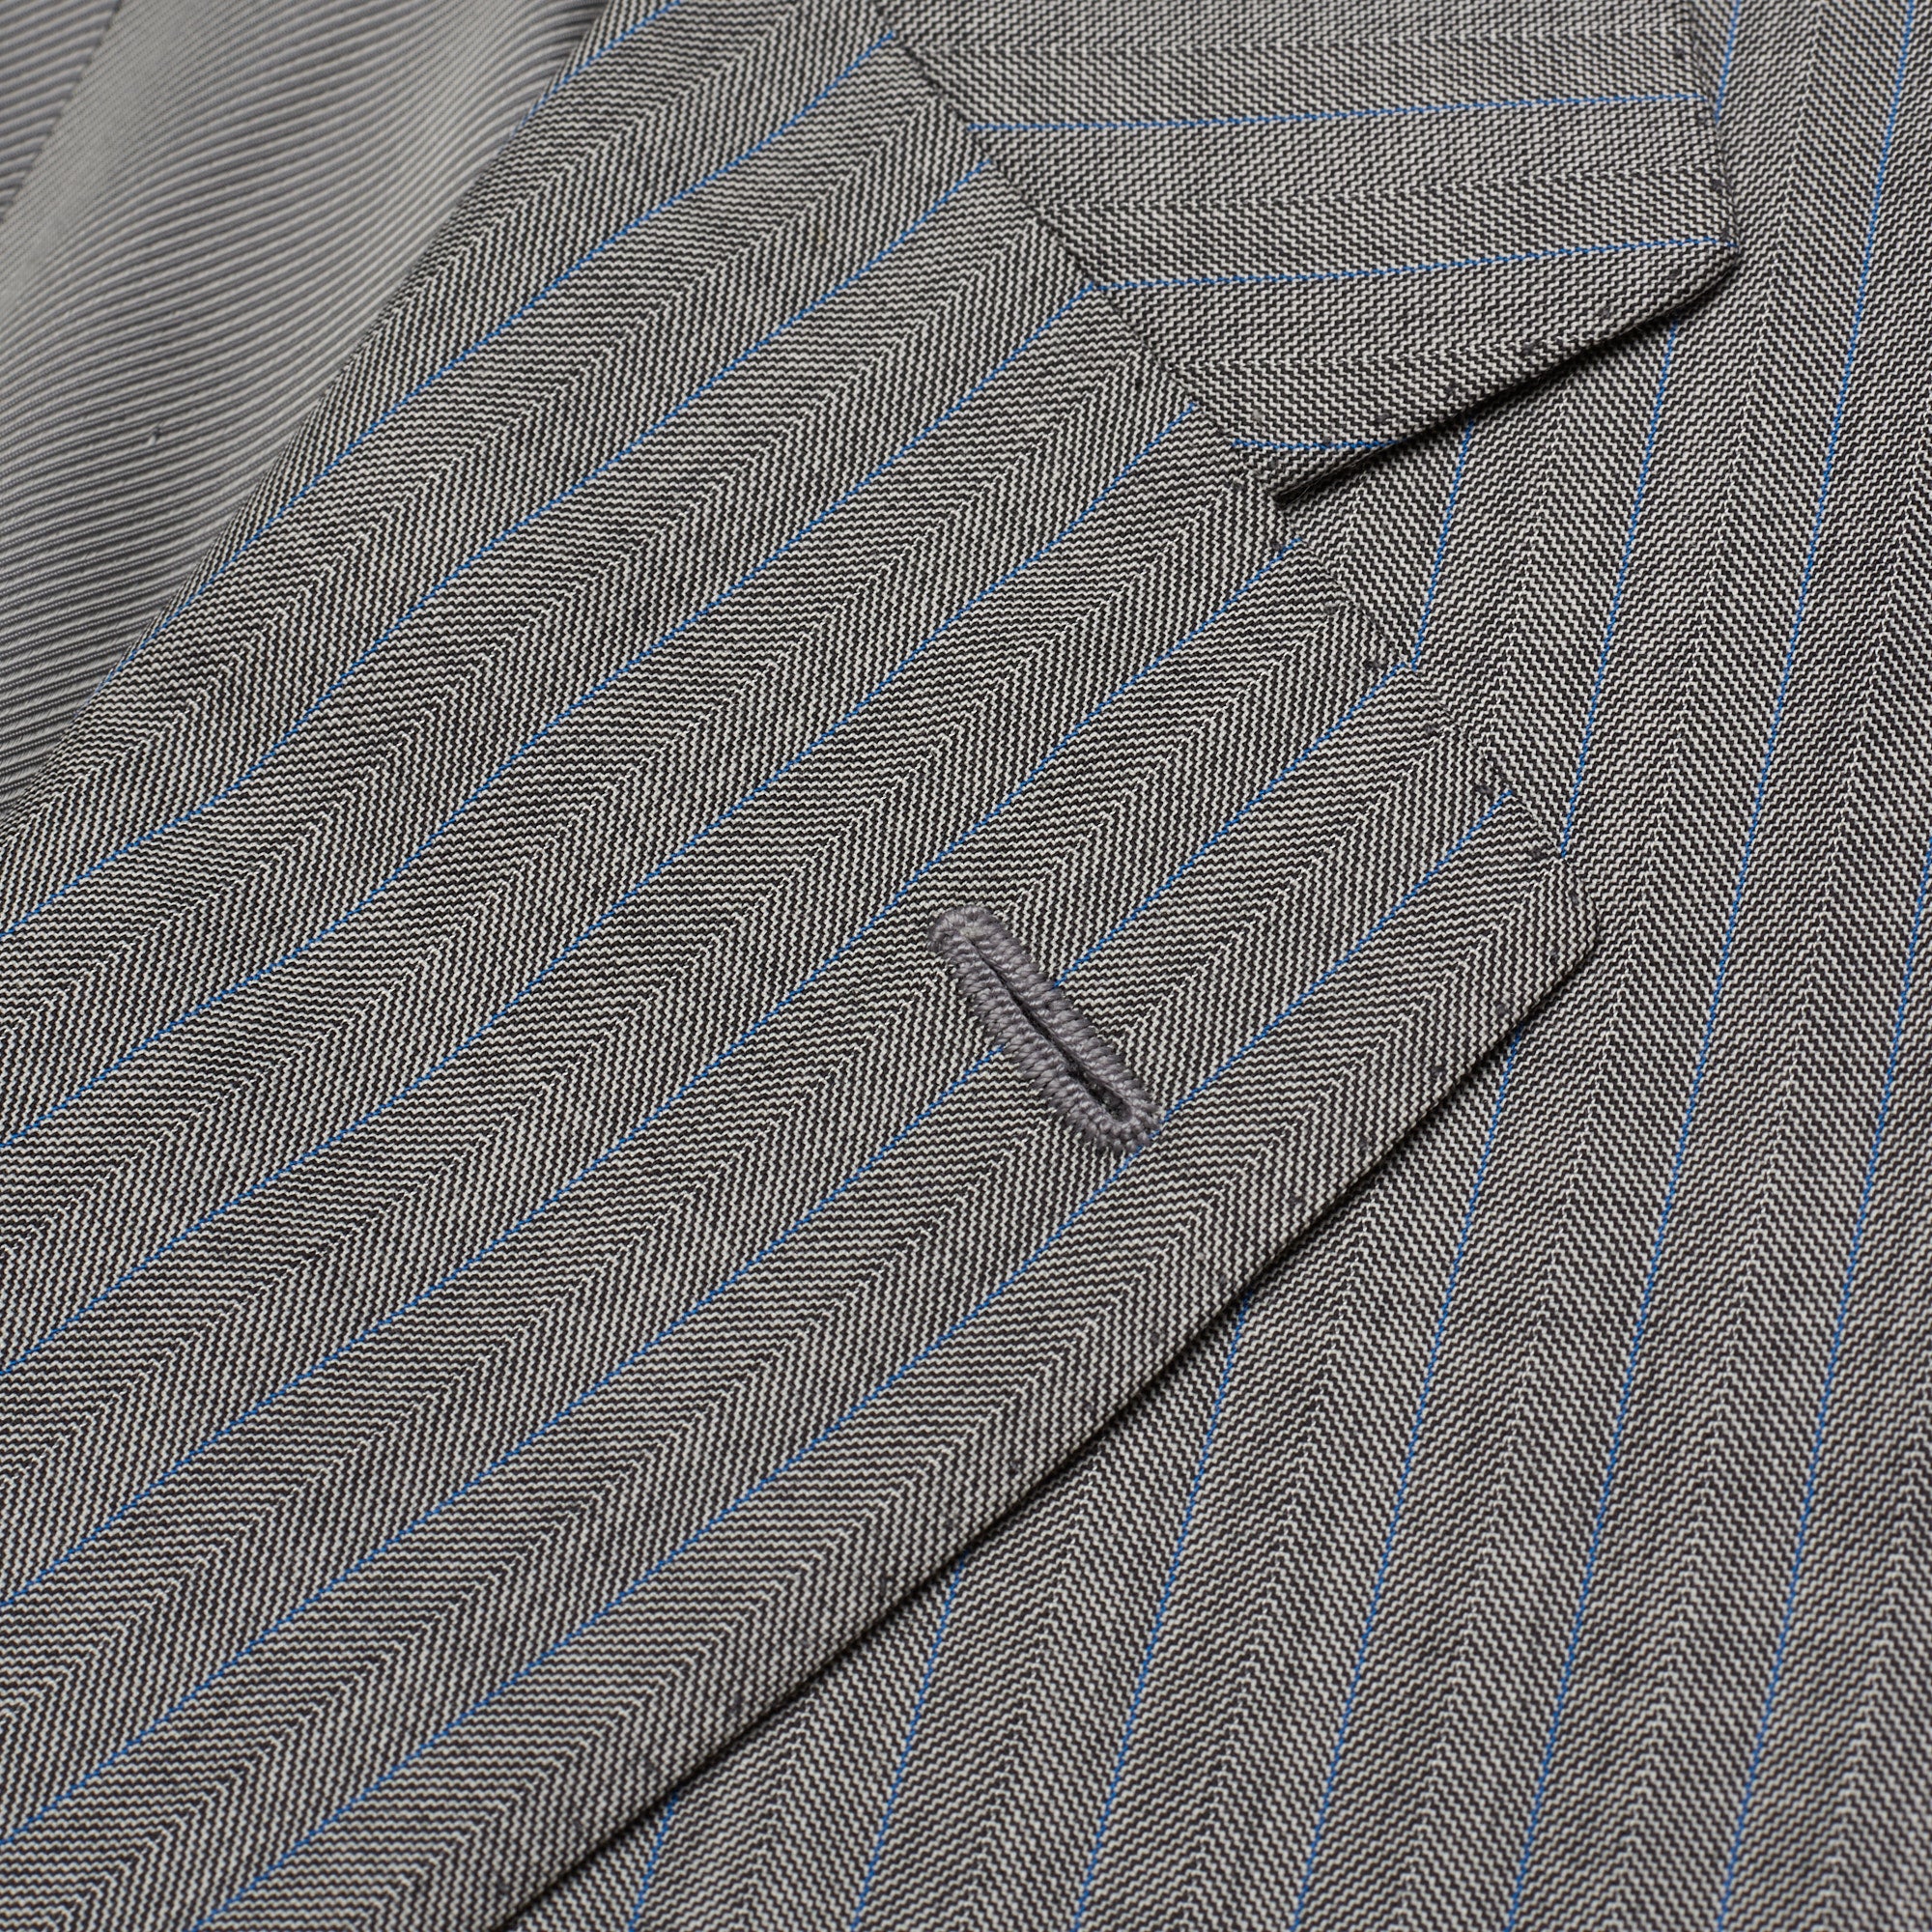 CESARE ATTOLINI Gray Herringbone Striped Wool Super 140's Suit EU 52 US 42